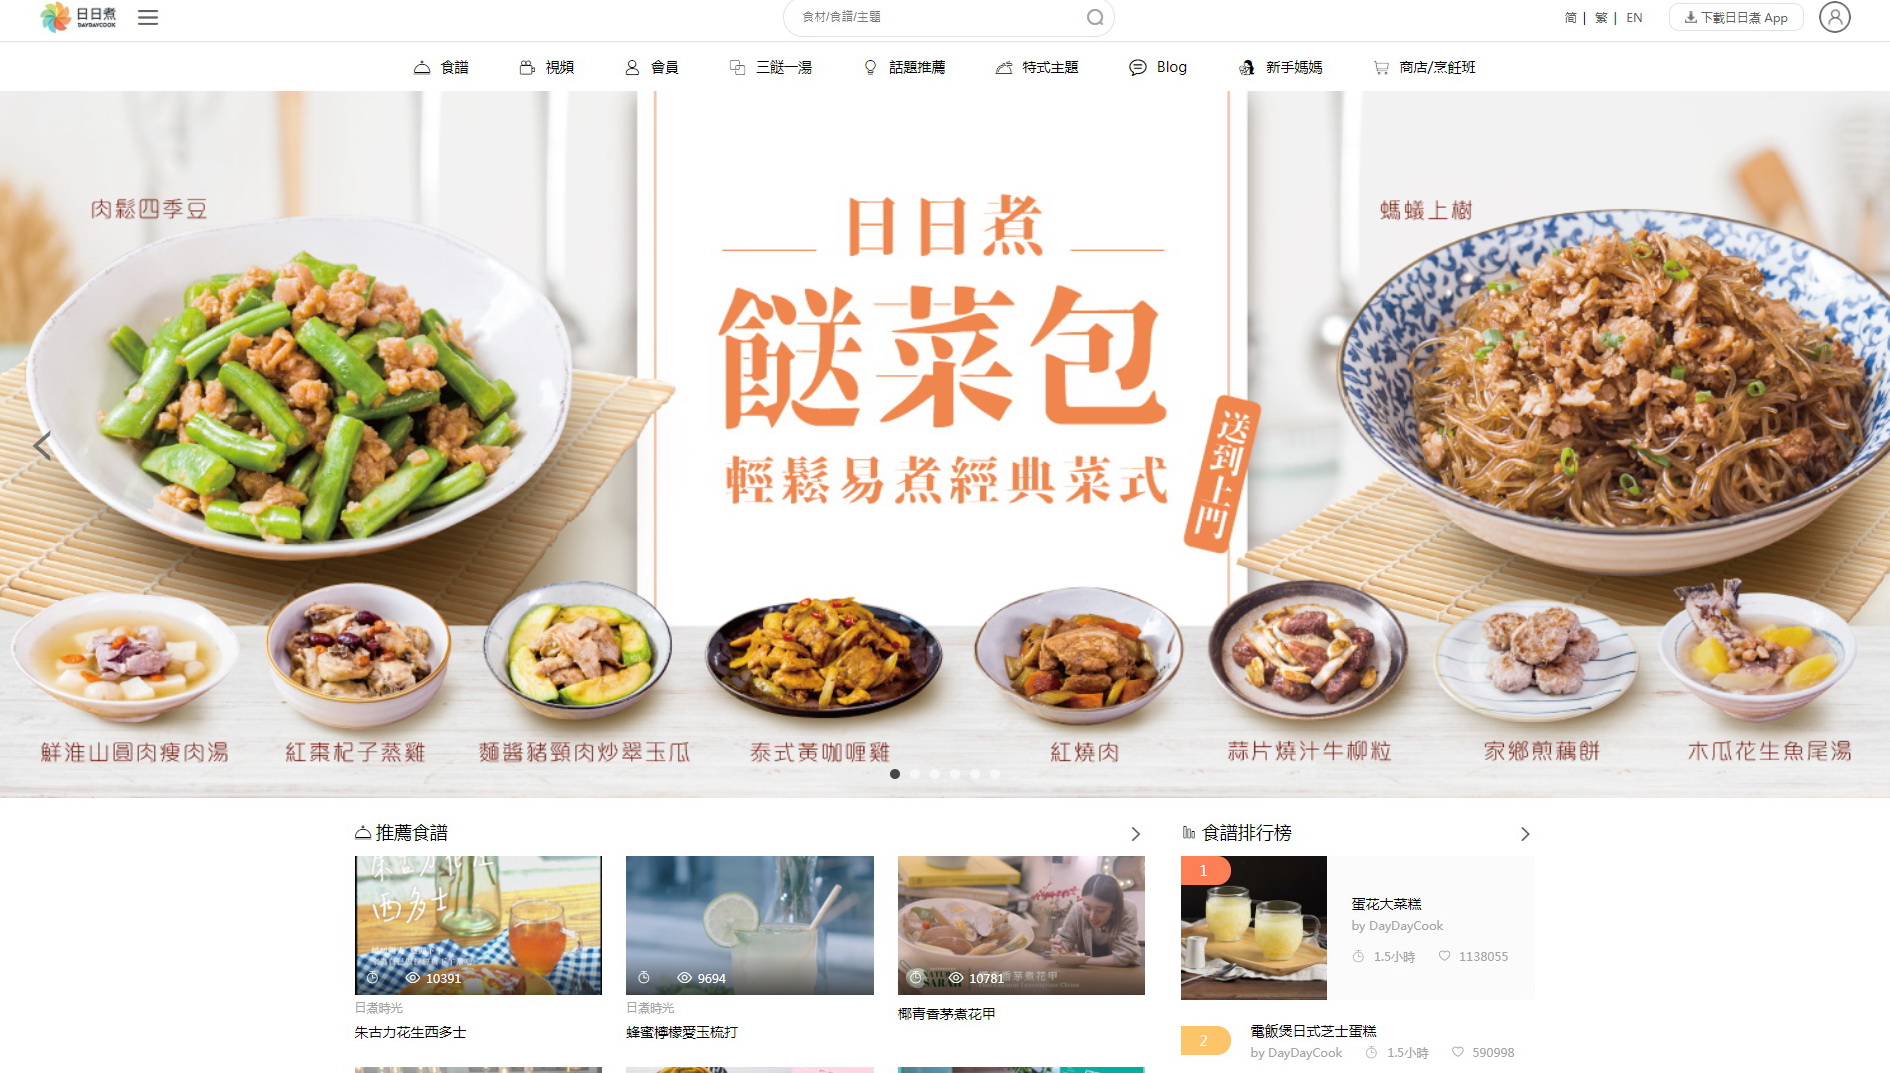 DayDayCook 2012年在香港成立，是一家利用社交媒體推廣在家煮食的內容平台。（日日煮網上圖片）